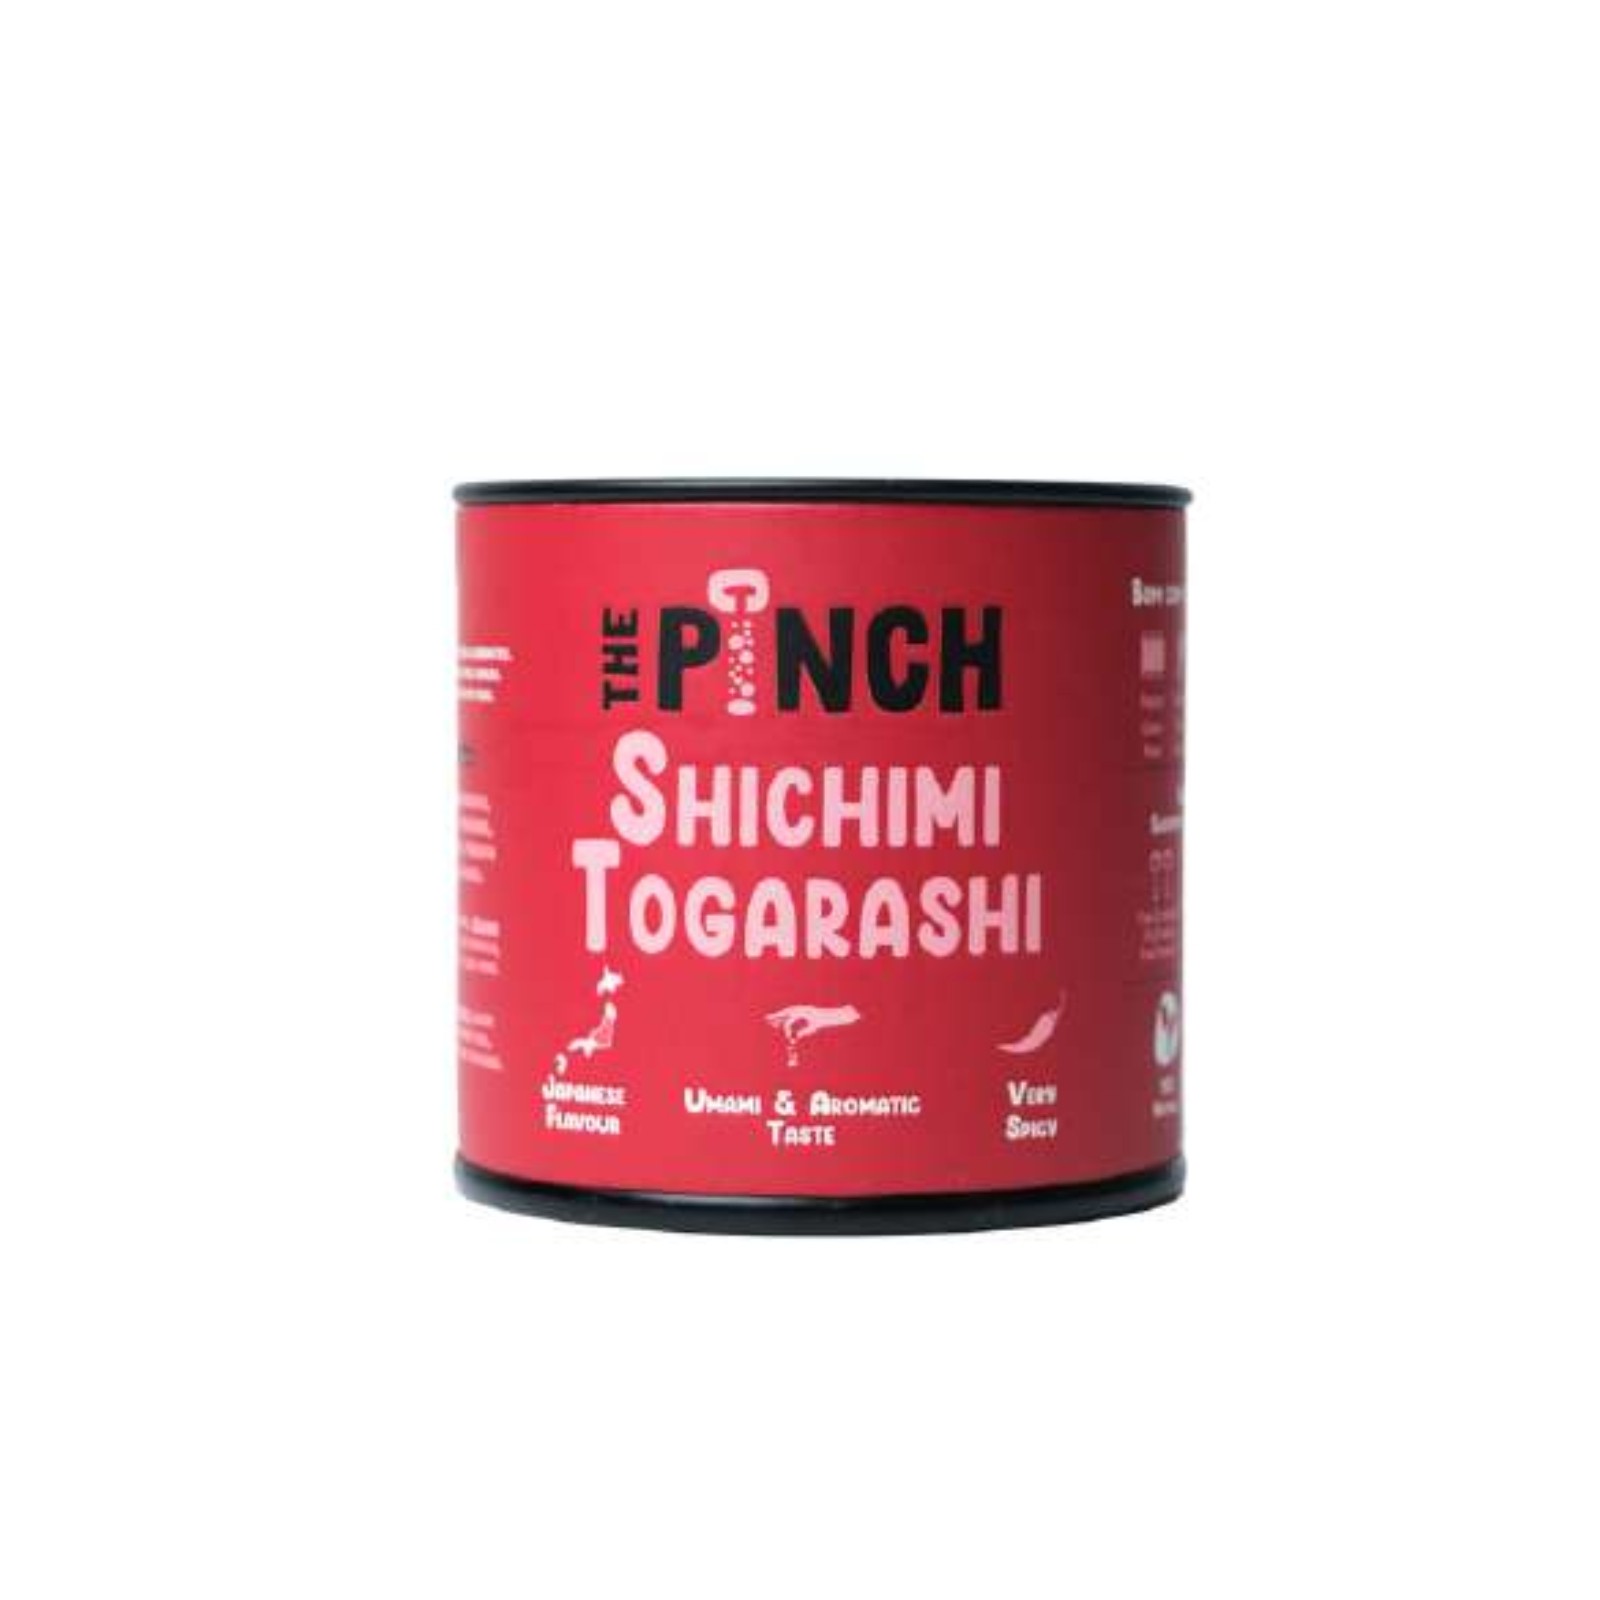 The Pinch Shichimi Togarashi Seasoning